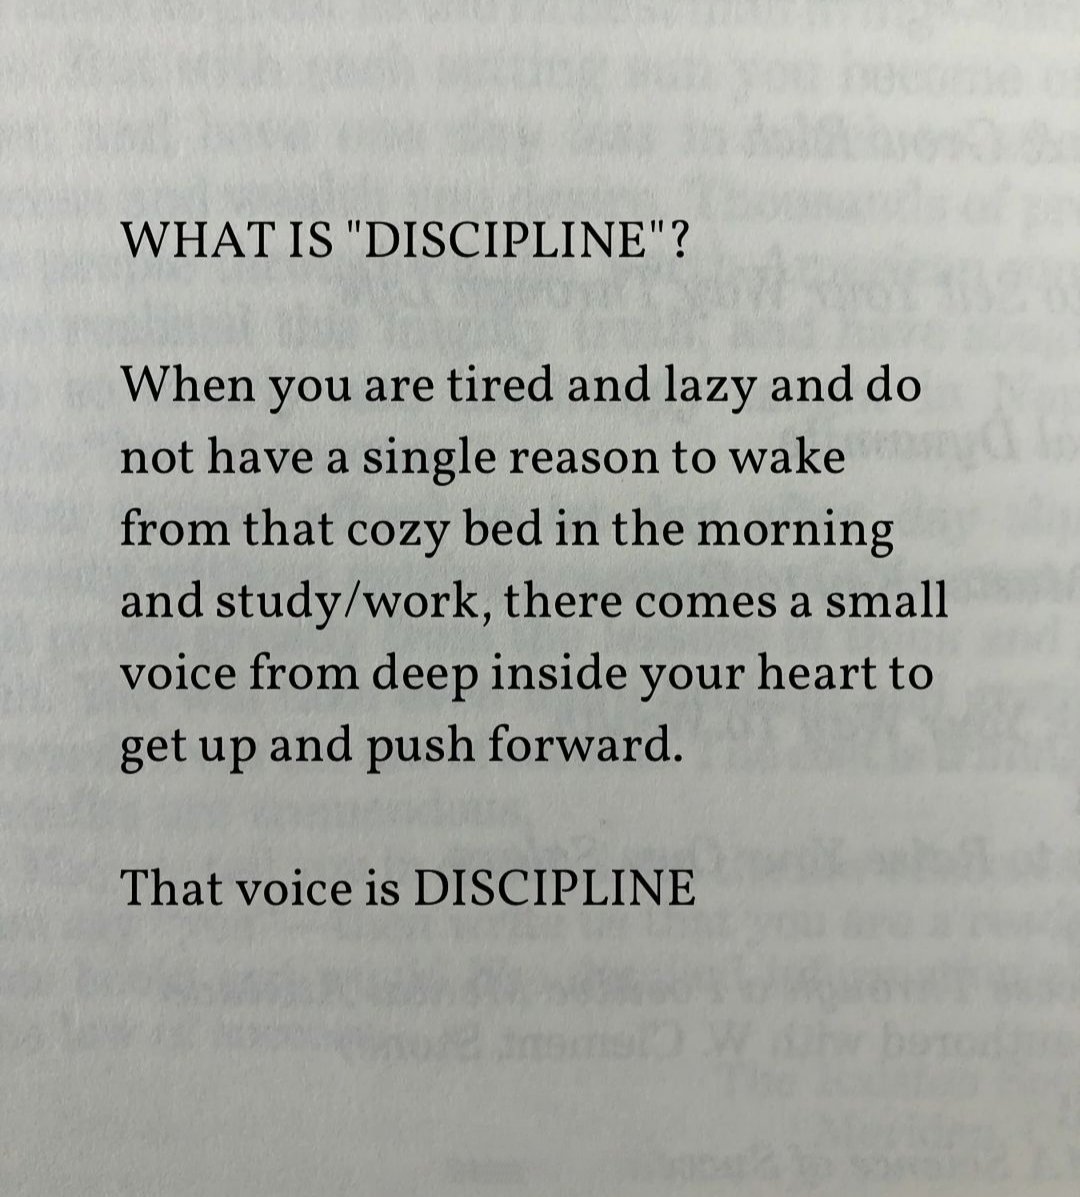 What is “DISCIPLINE”?